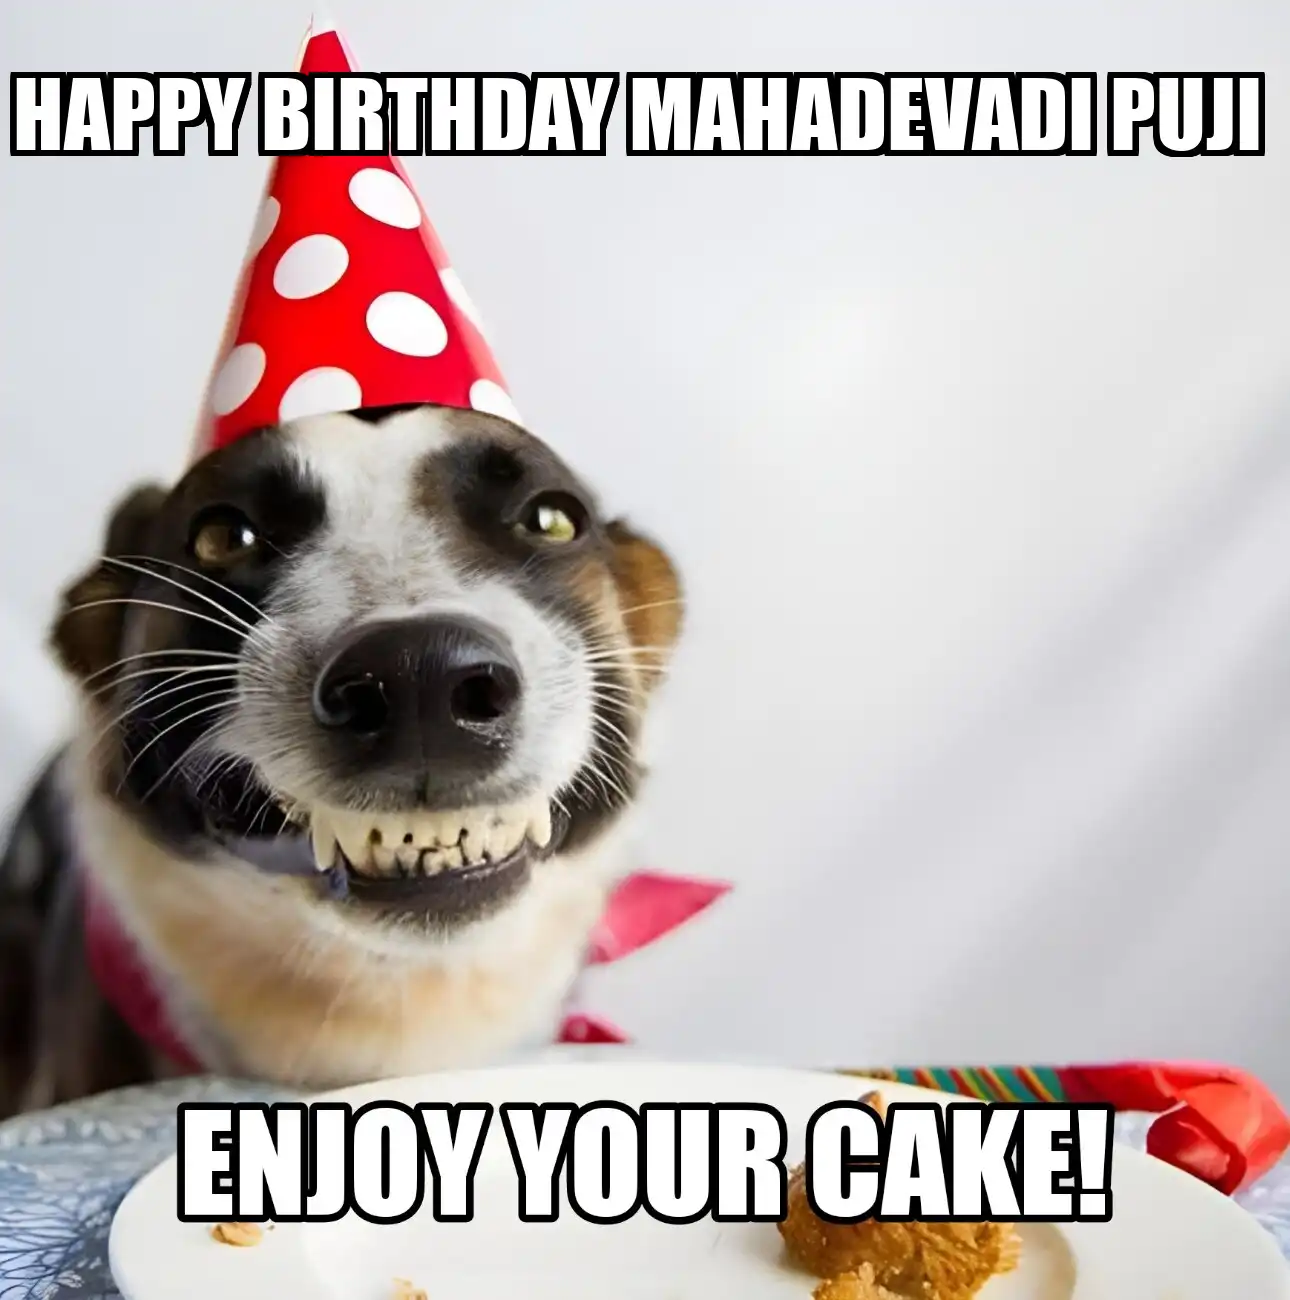 Happy Birthday Mahadevadi Puji Enjoy Your Cake Dog Meme